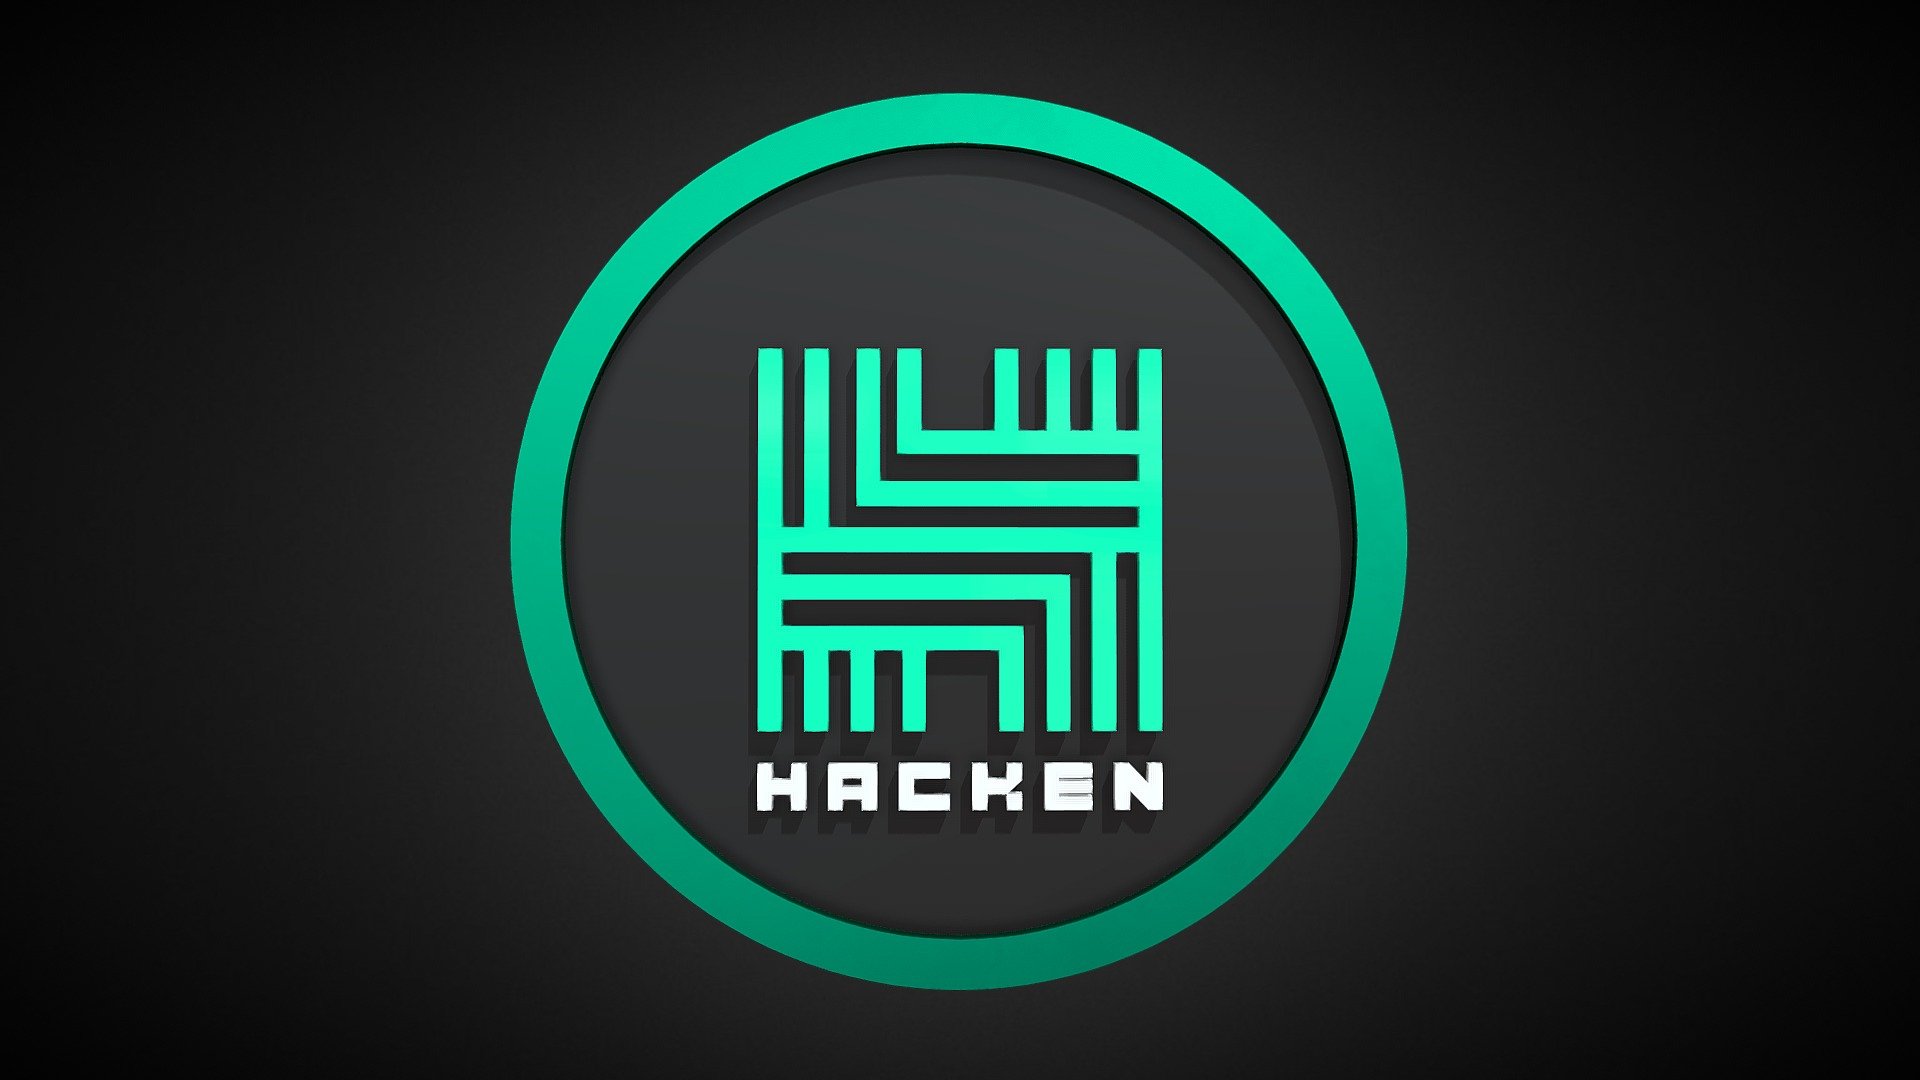 Hacken Tokenomics Solution Boosts HAI Value